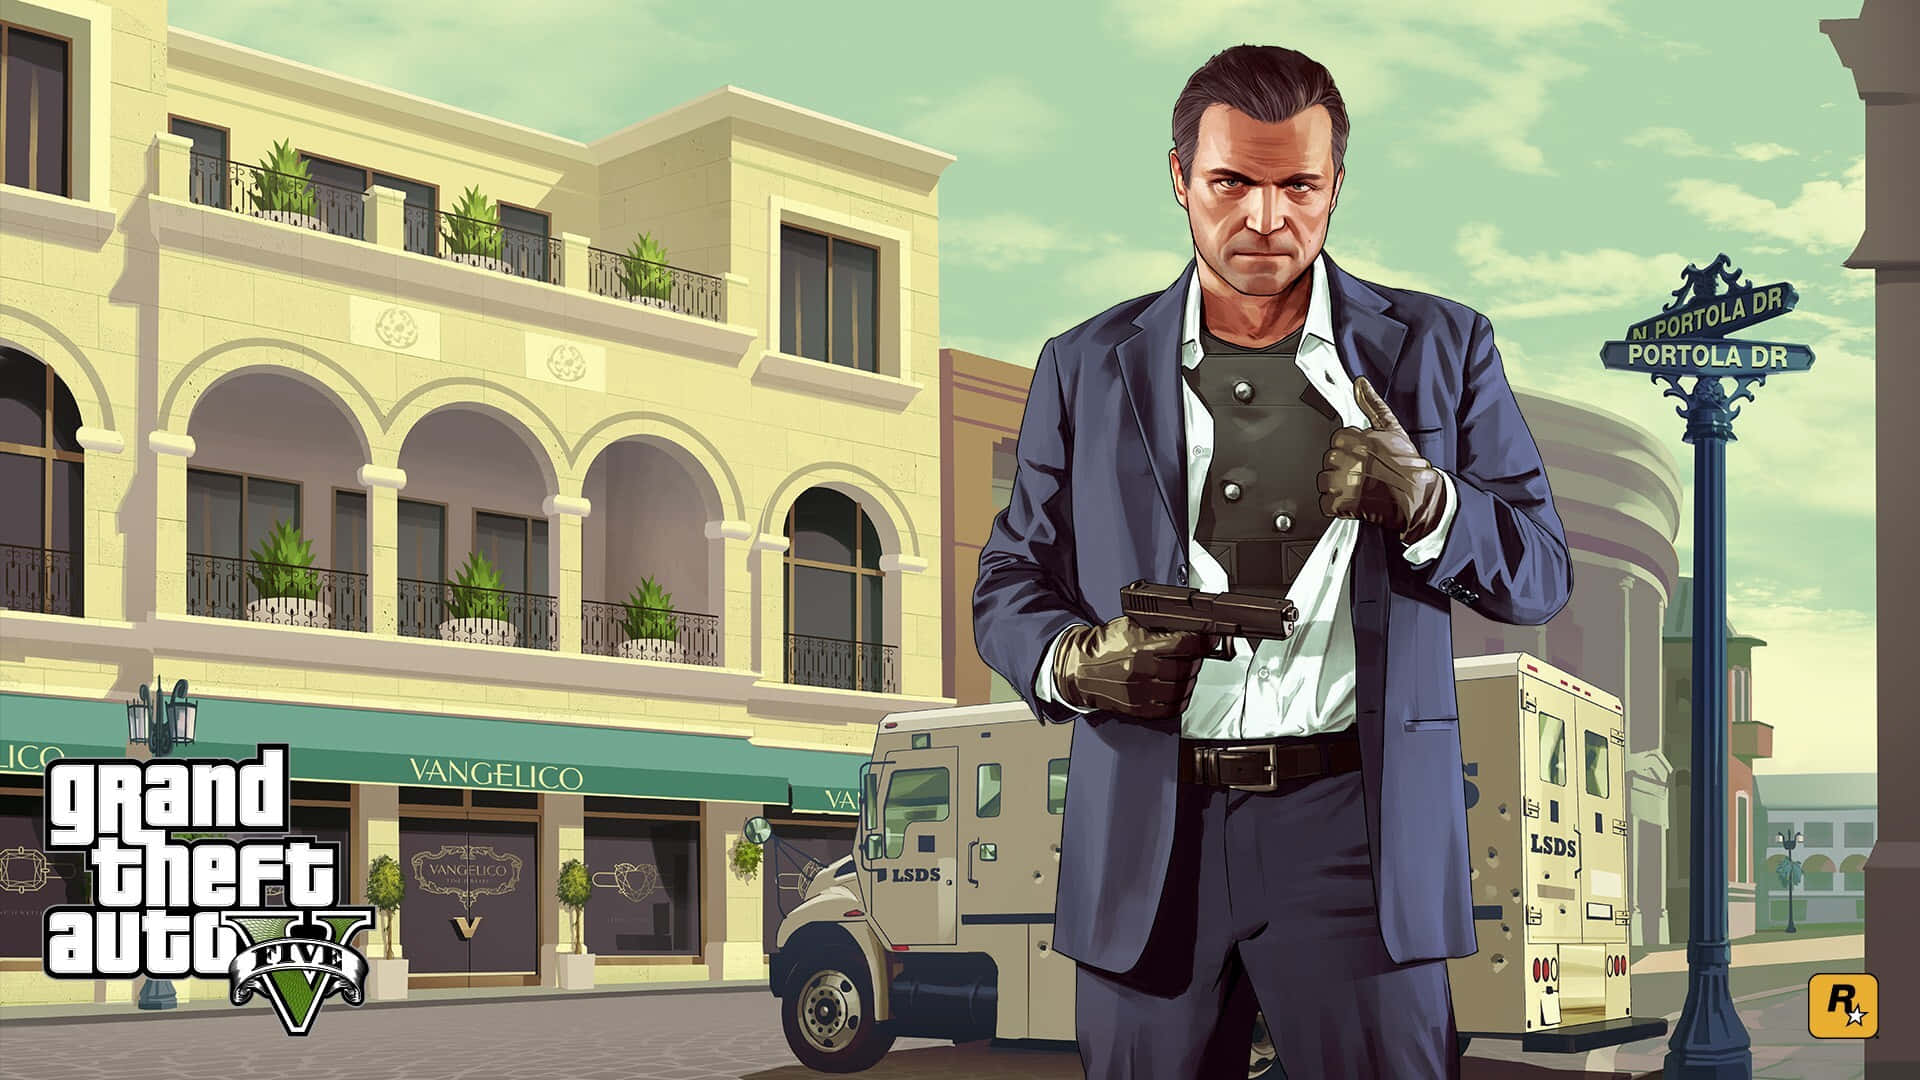 Udforsk byen Los Santos i Grand Theft Auto 5 Wallpaper